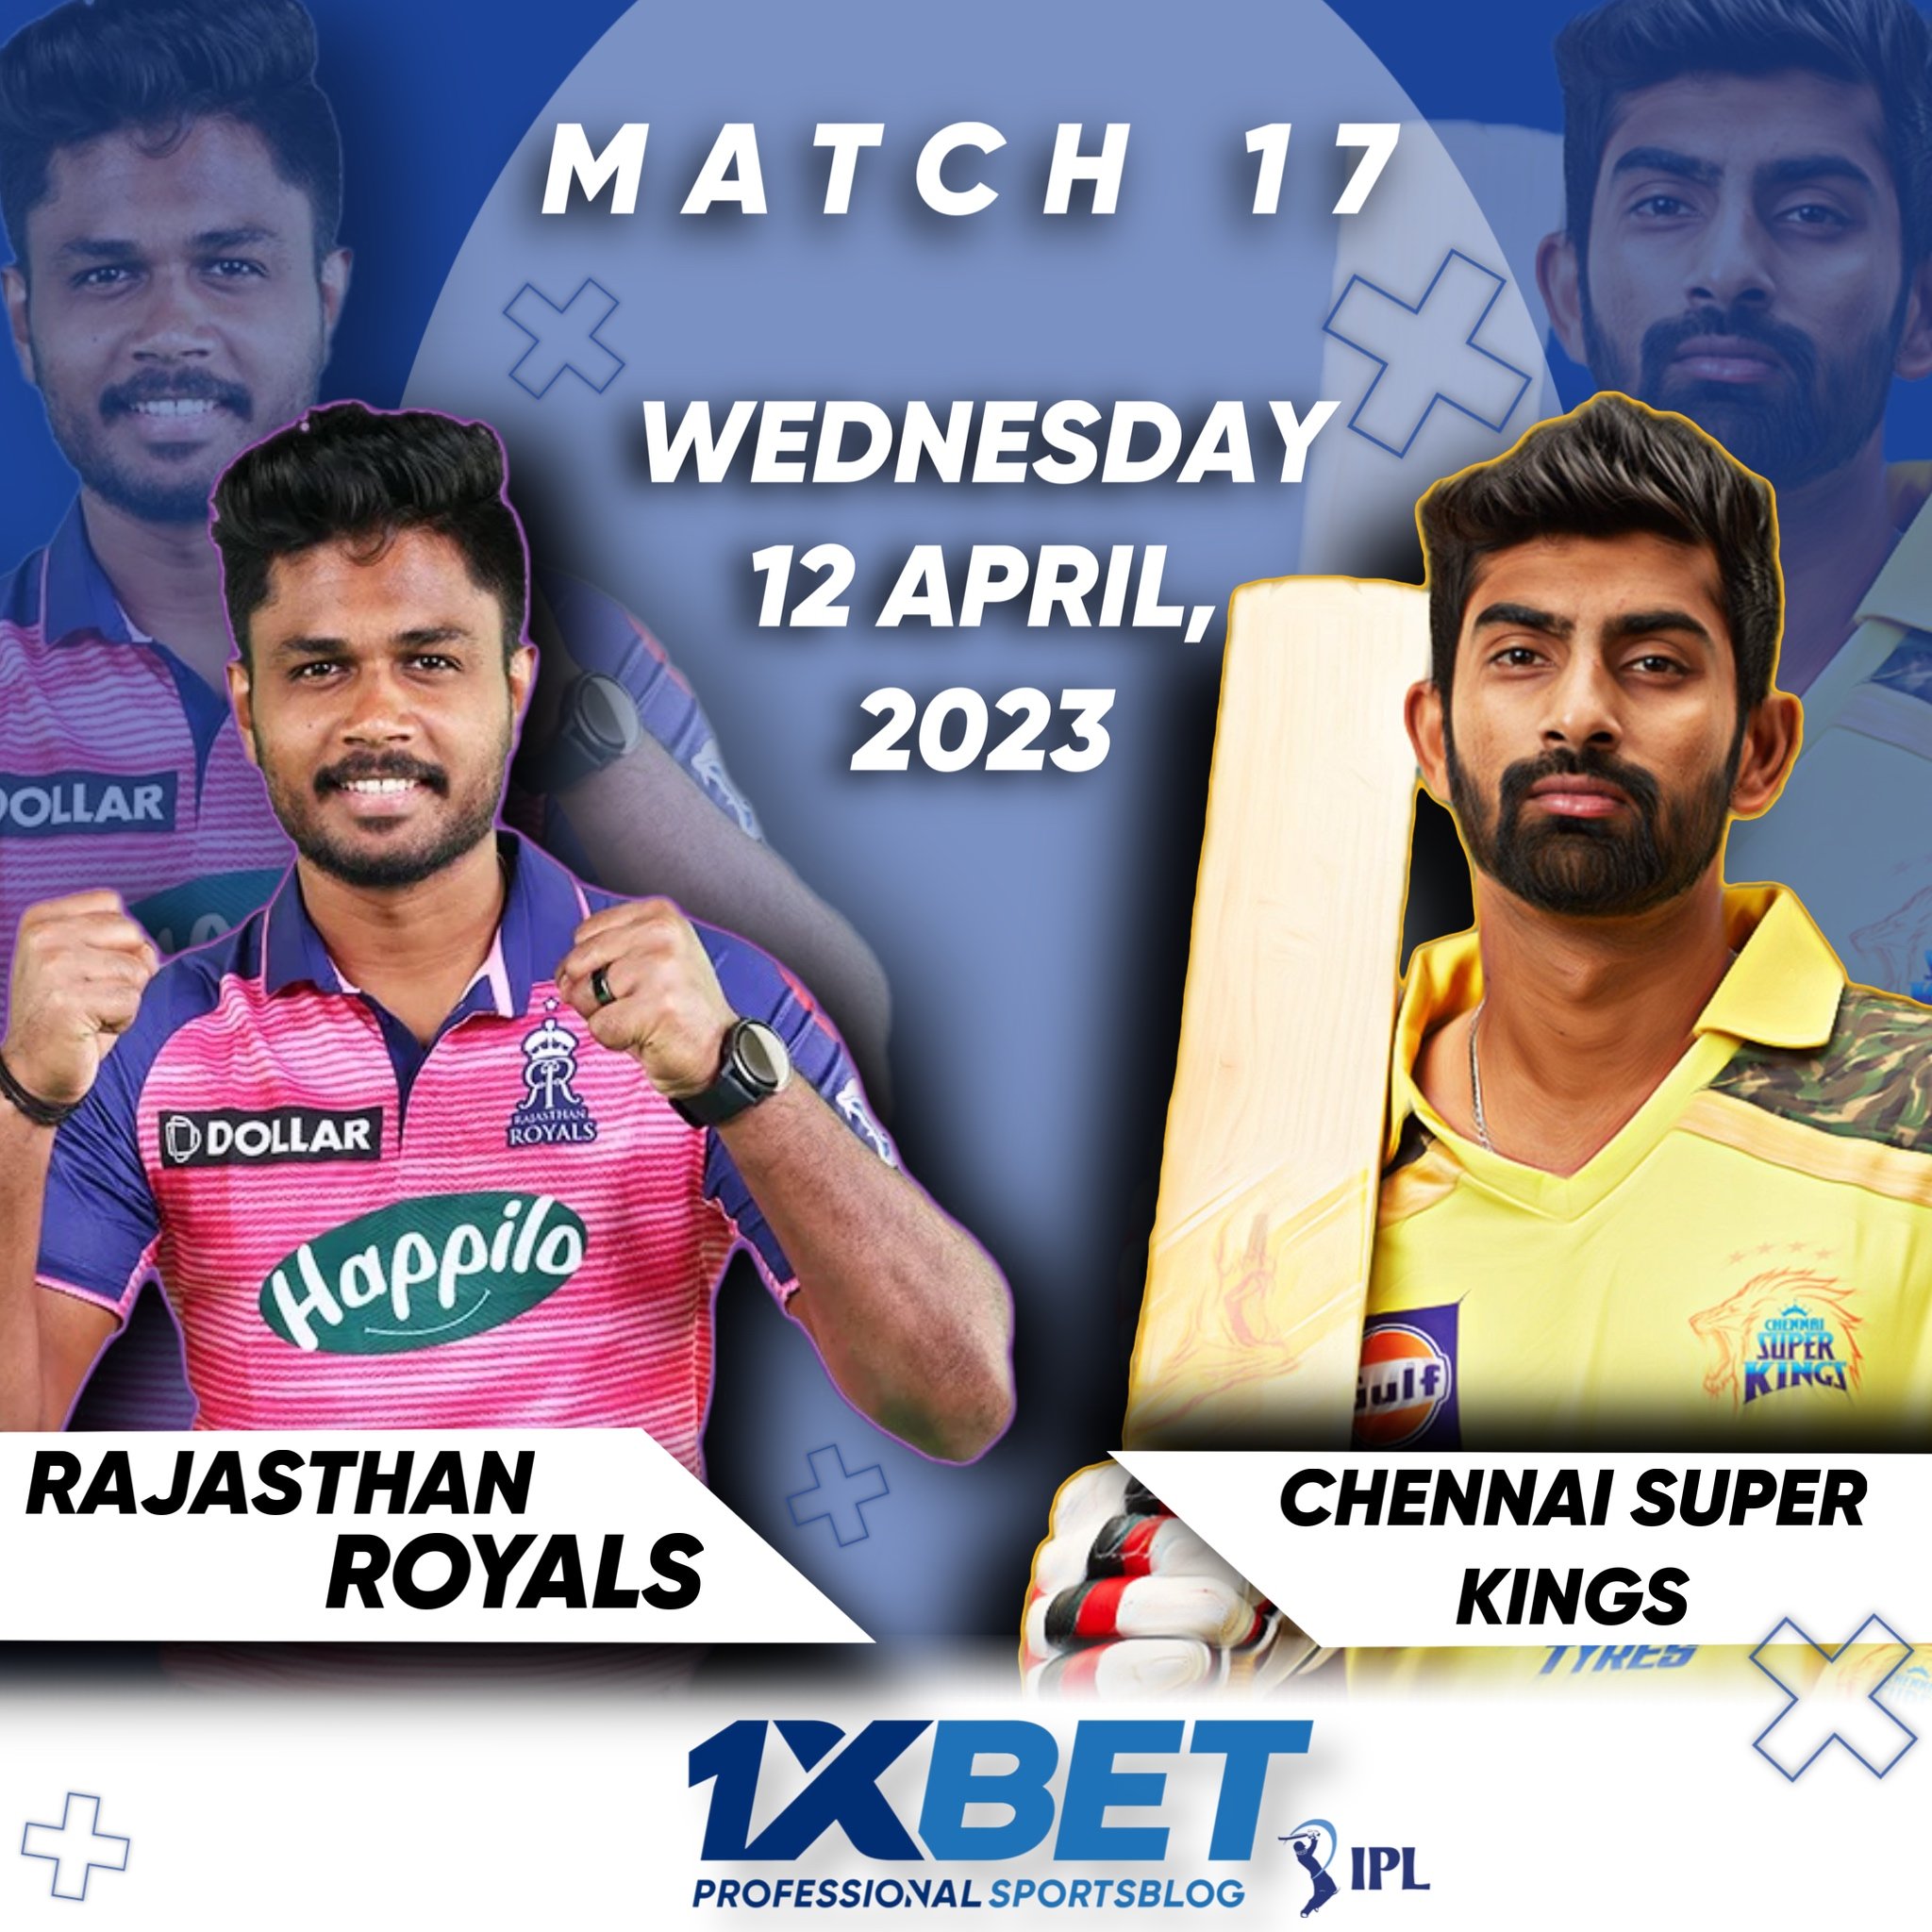 Rajasthan Royals vs Chennai Super Kings, IPL 2023, 17th Match Analysis